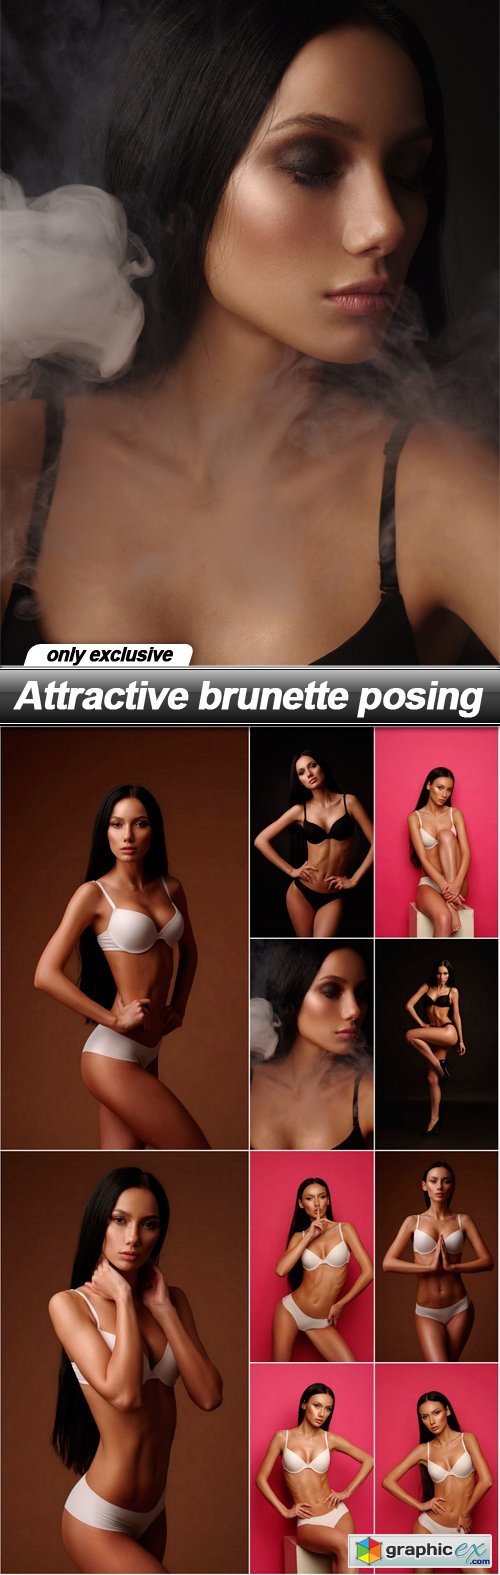 Attractive brunette posing - 10 UHQ JPEG